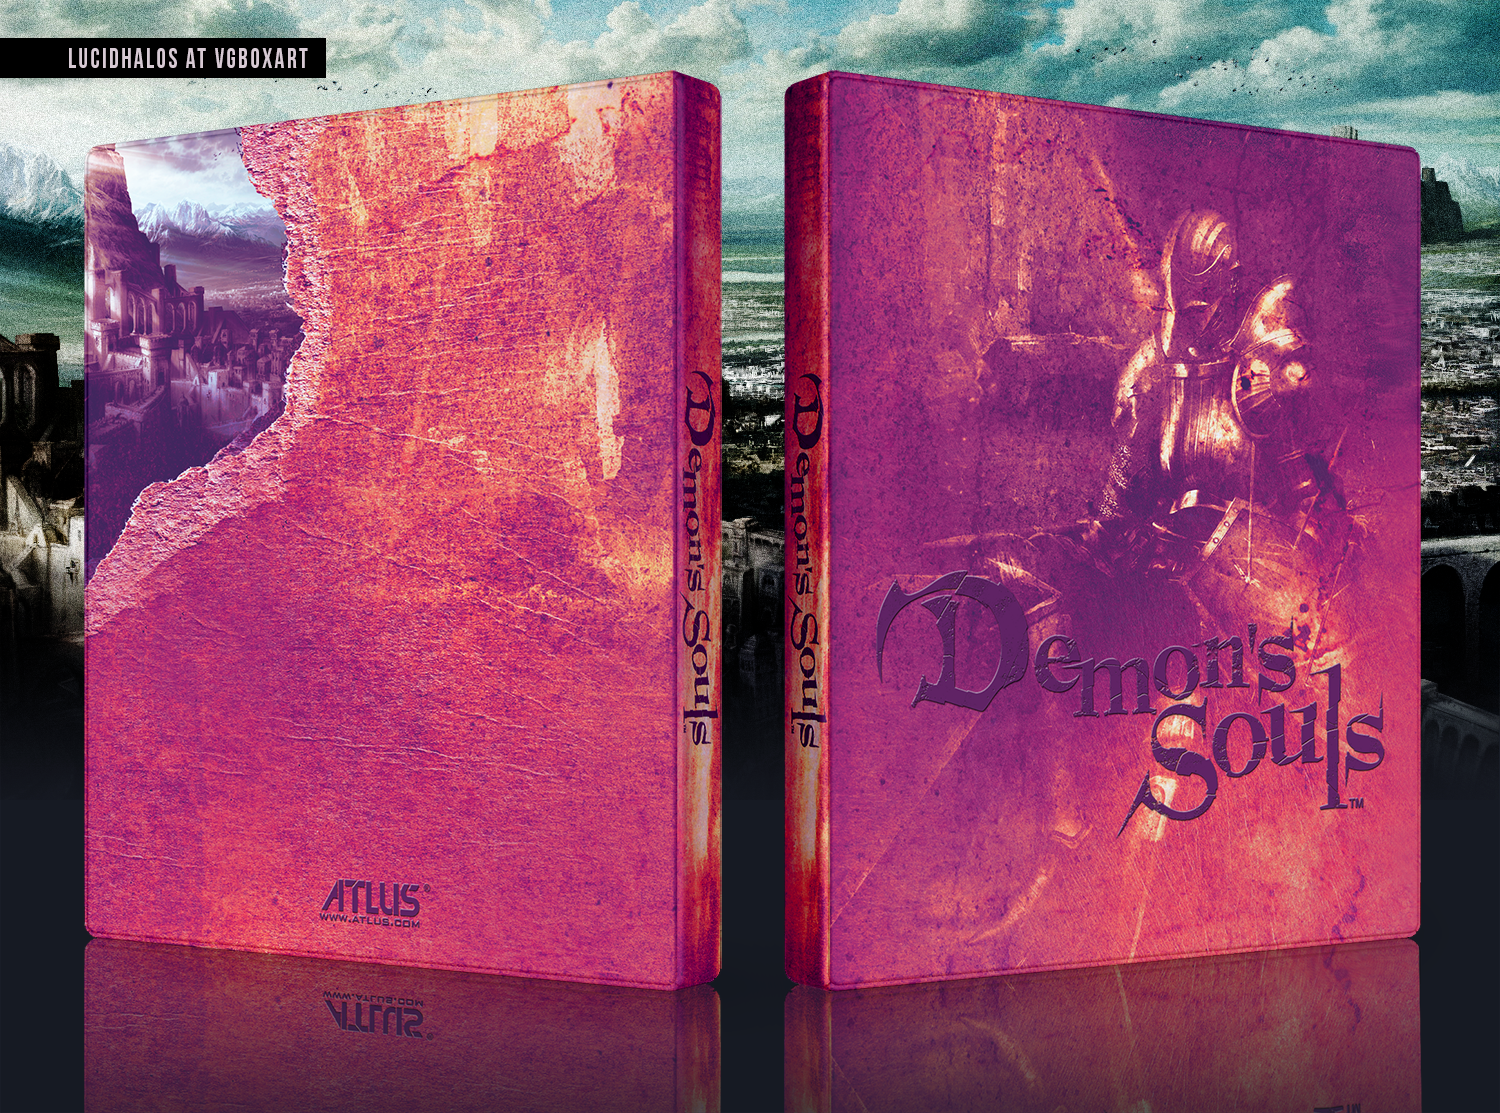 Demon's Souls box cover